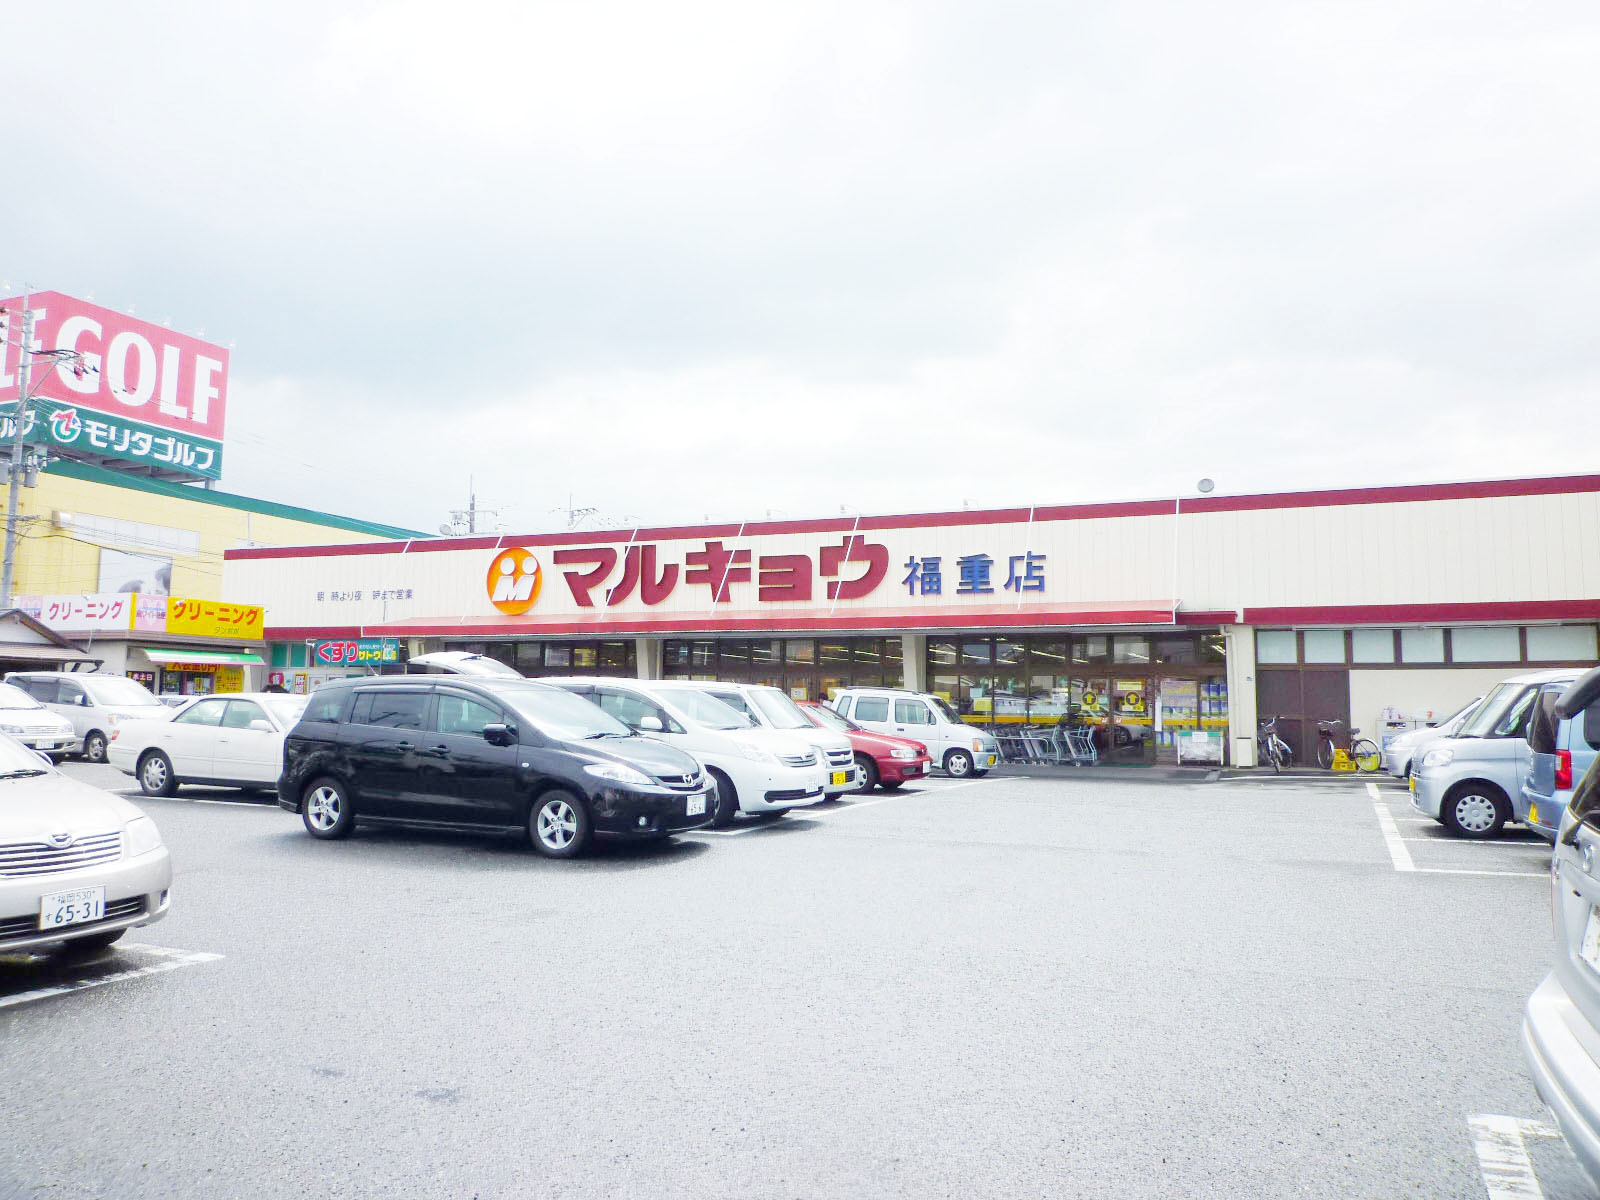 Supermarket. Marukyo Corporation Fukushige store up to (super) 337m